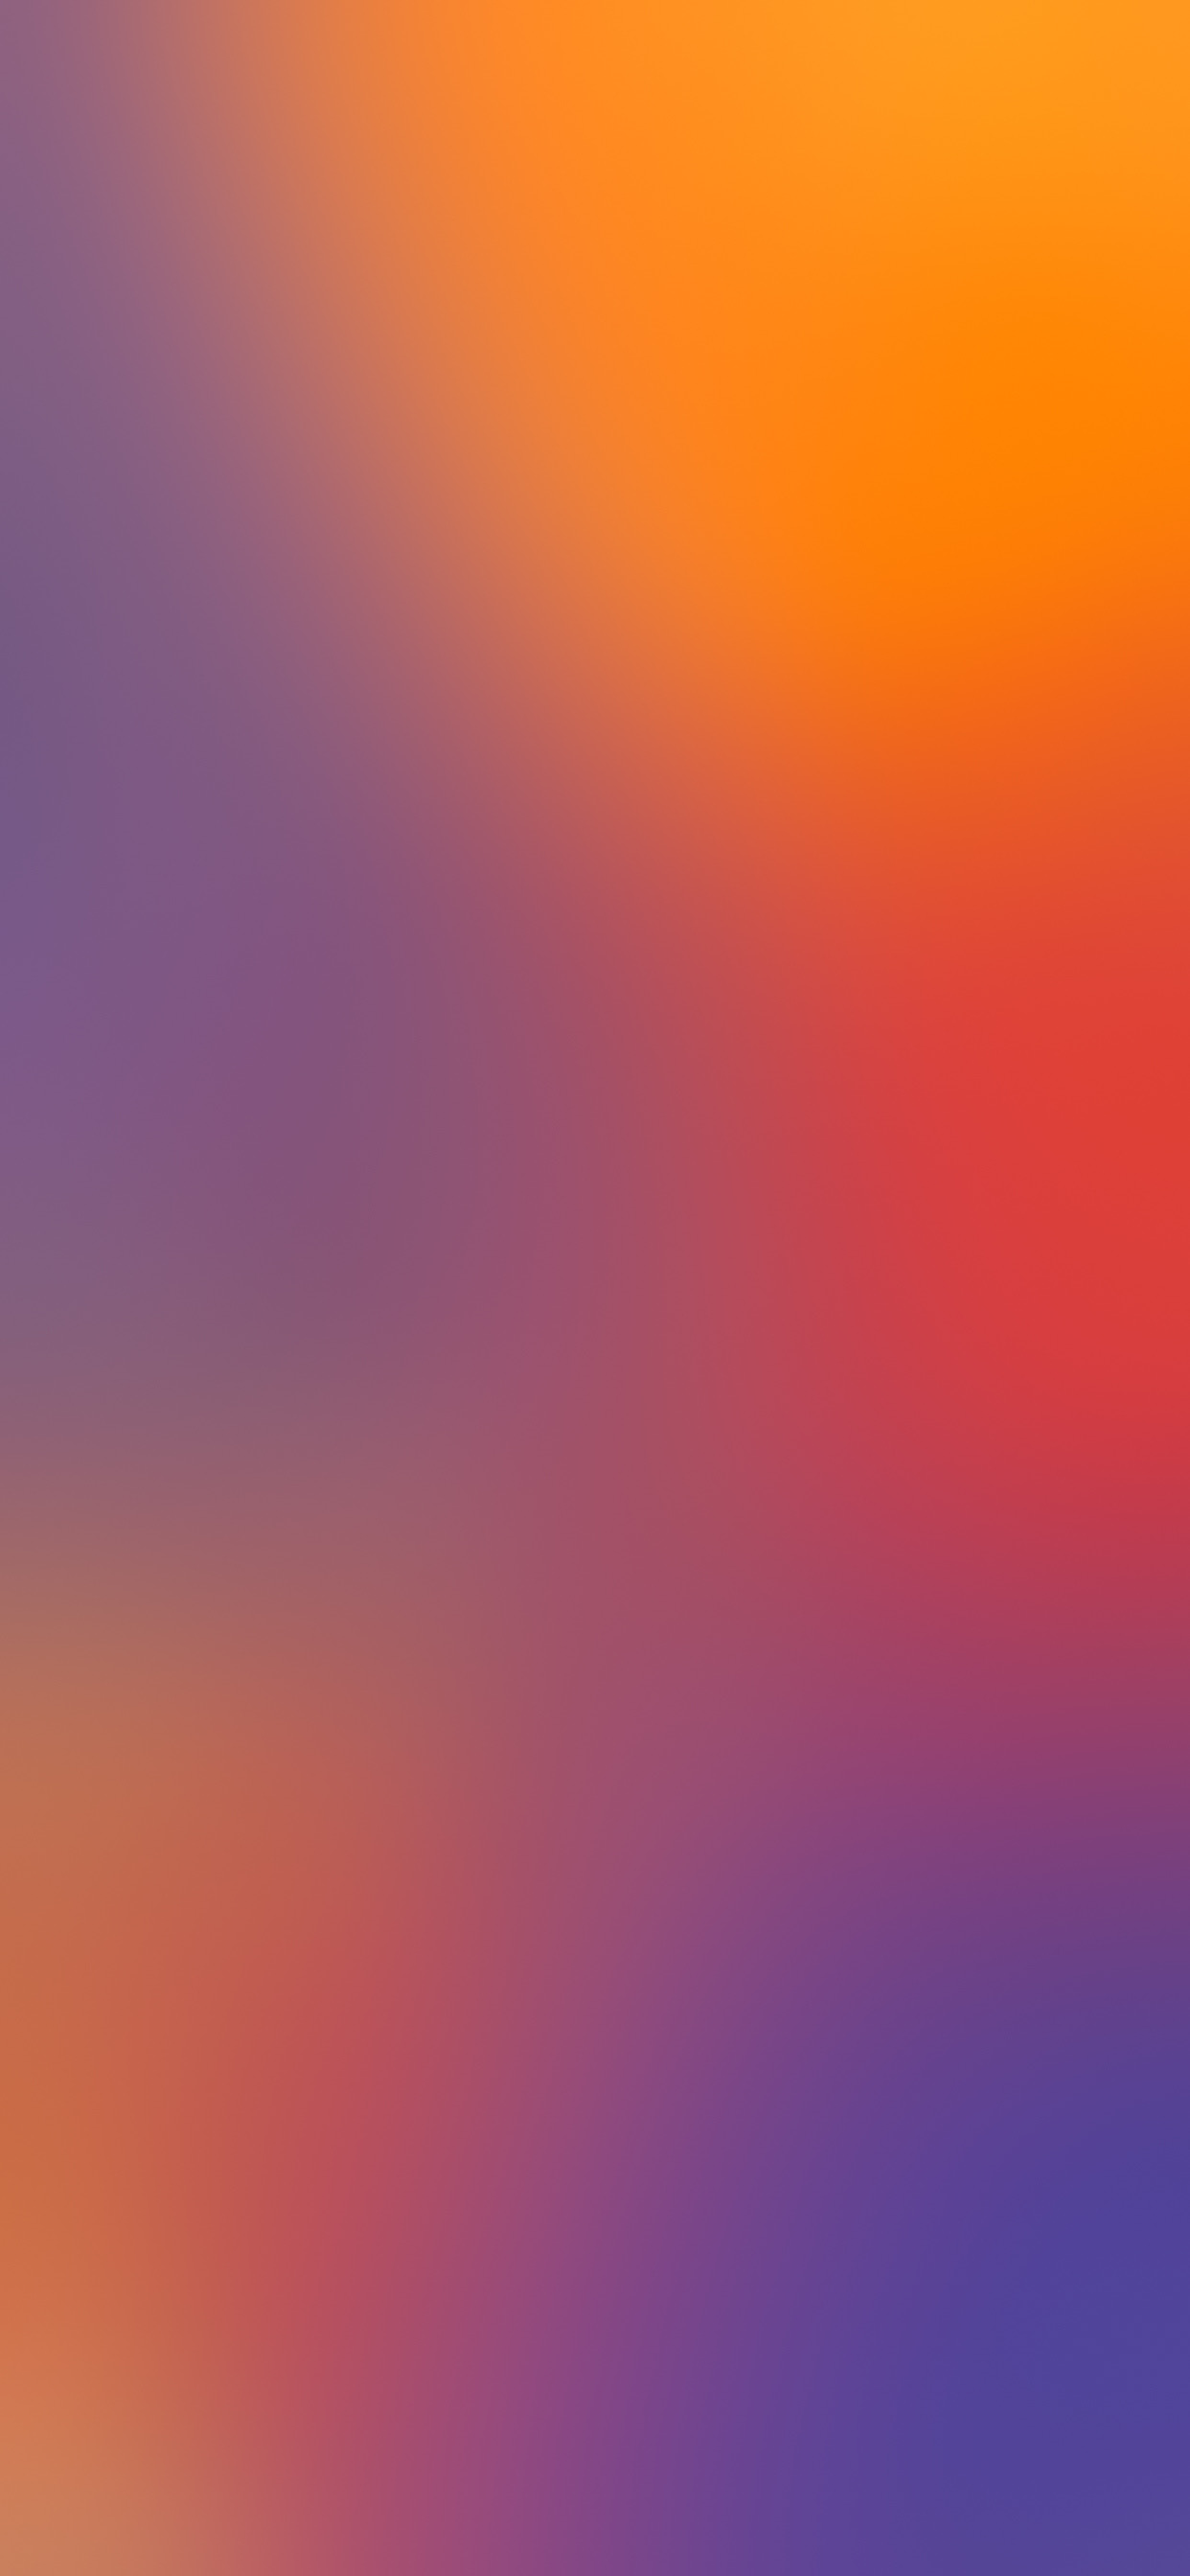 iOS 14 promotional gradients iphone wallpaper ar72014 idownloadblog 3